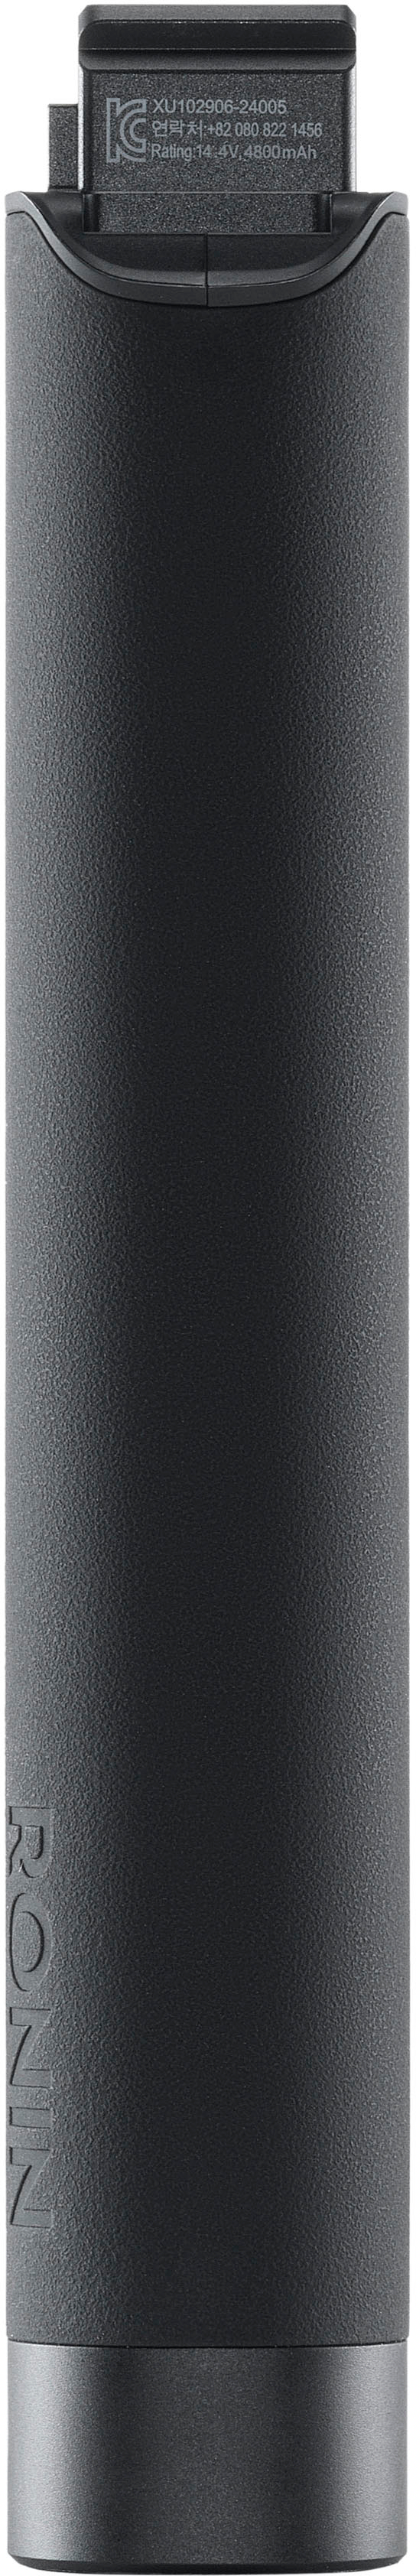 DJI - RS BG70 High-Capacity Battery Grip - Black